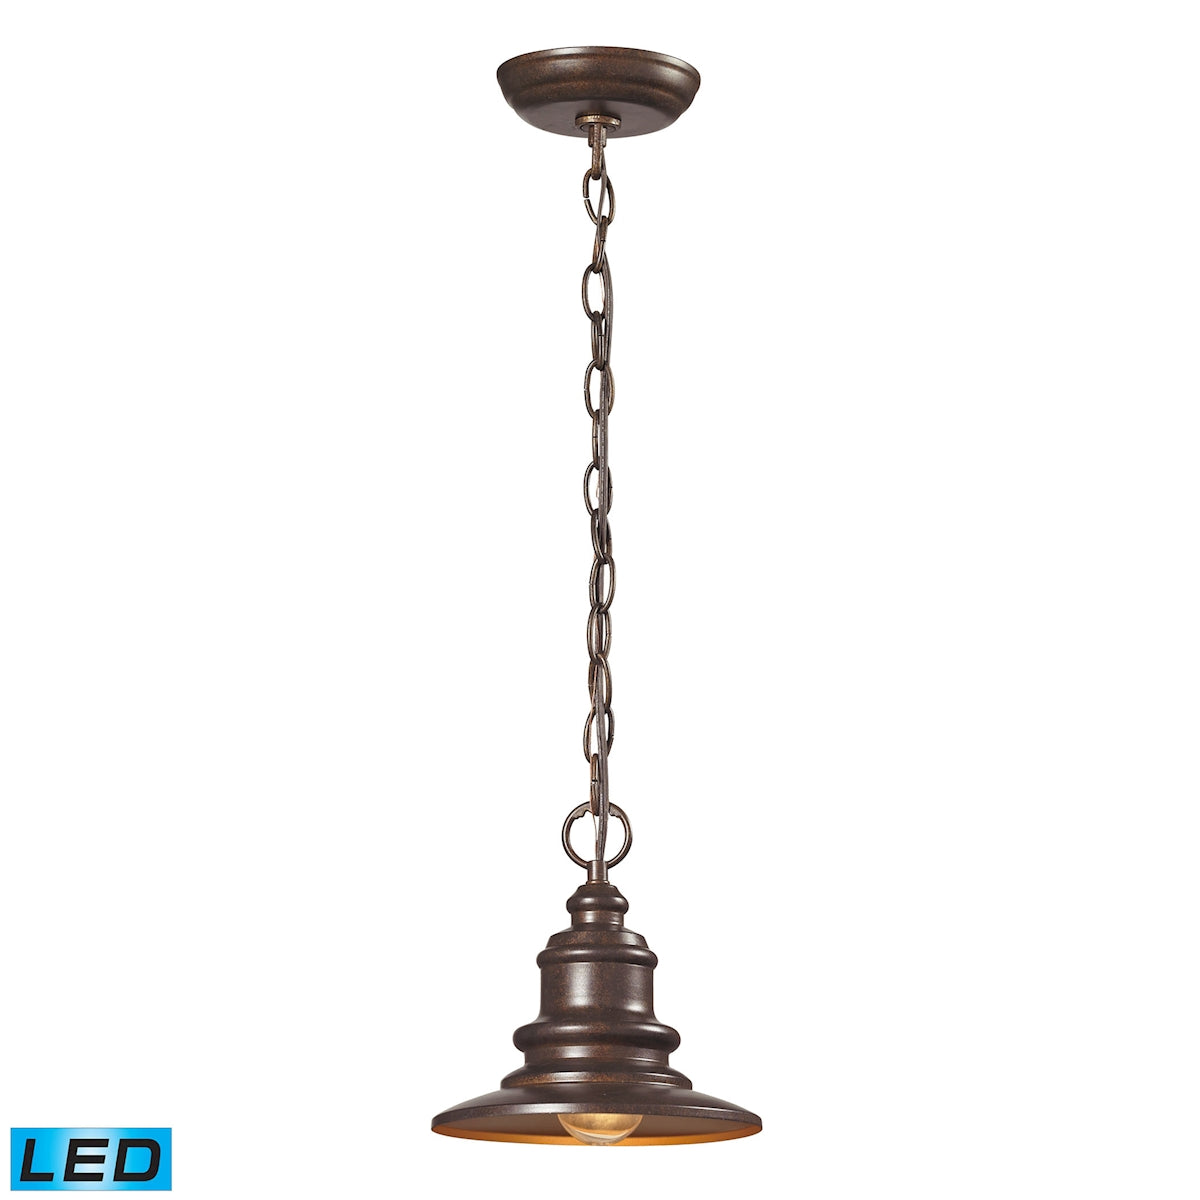 ELK Lighting 47011/1-LED Marina 1-Light Outdoor Pendant in Hazelnut Bronze - Includes LED Bulb